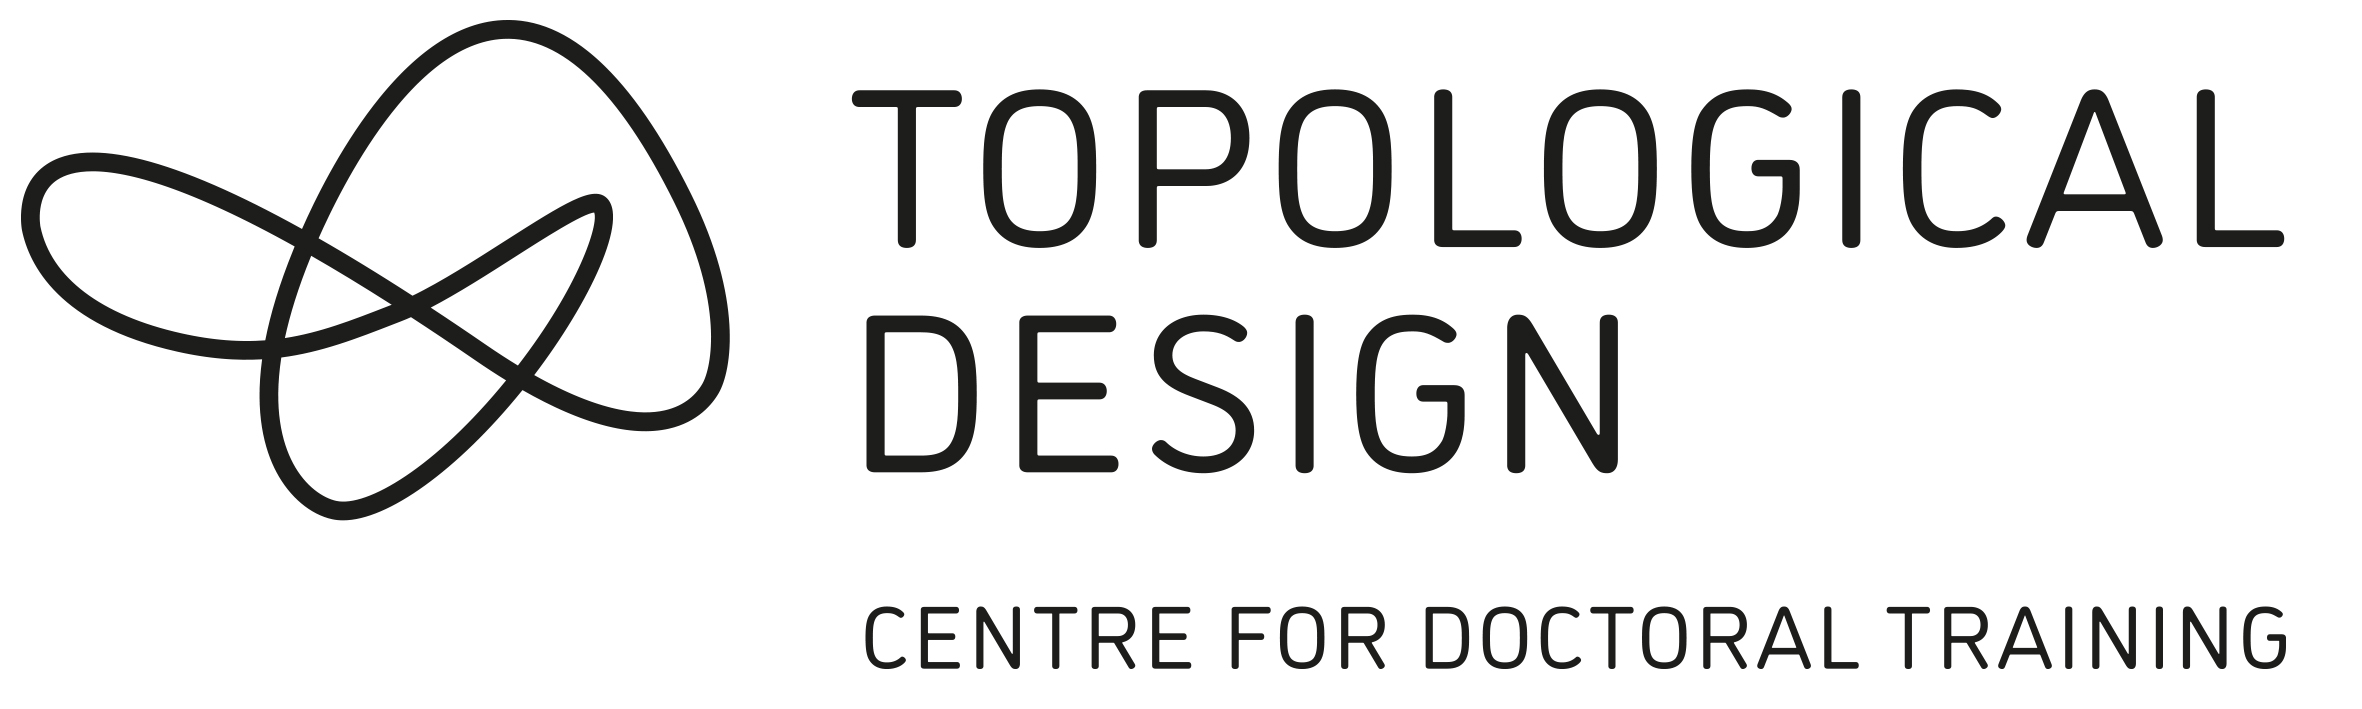 Topological Design CDT logo